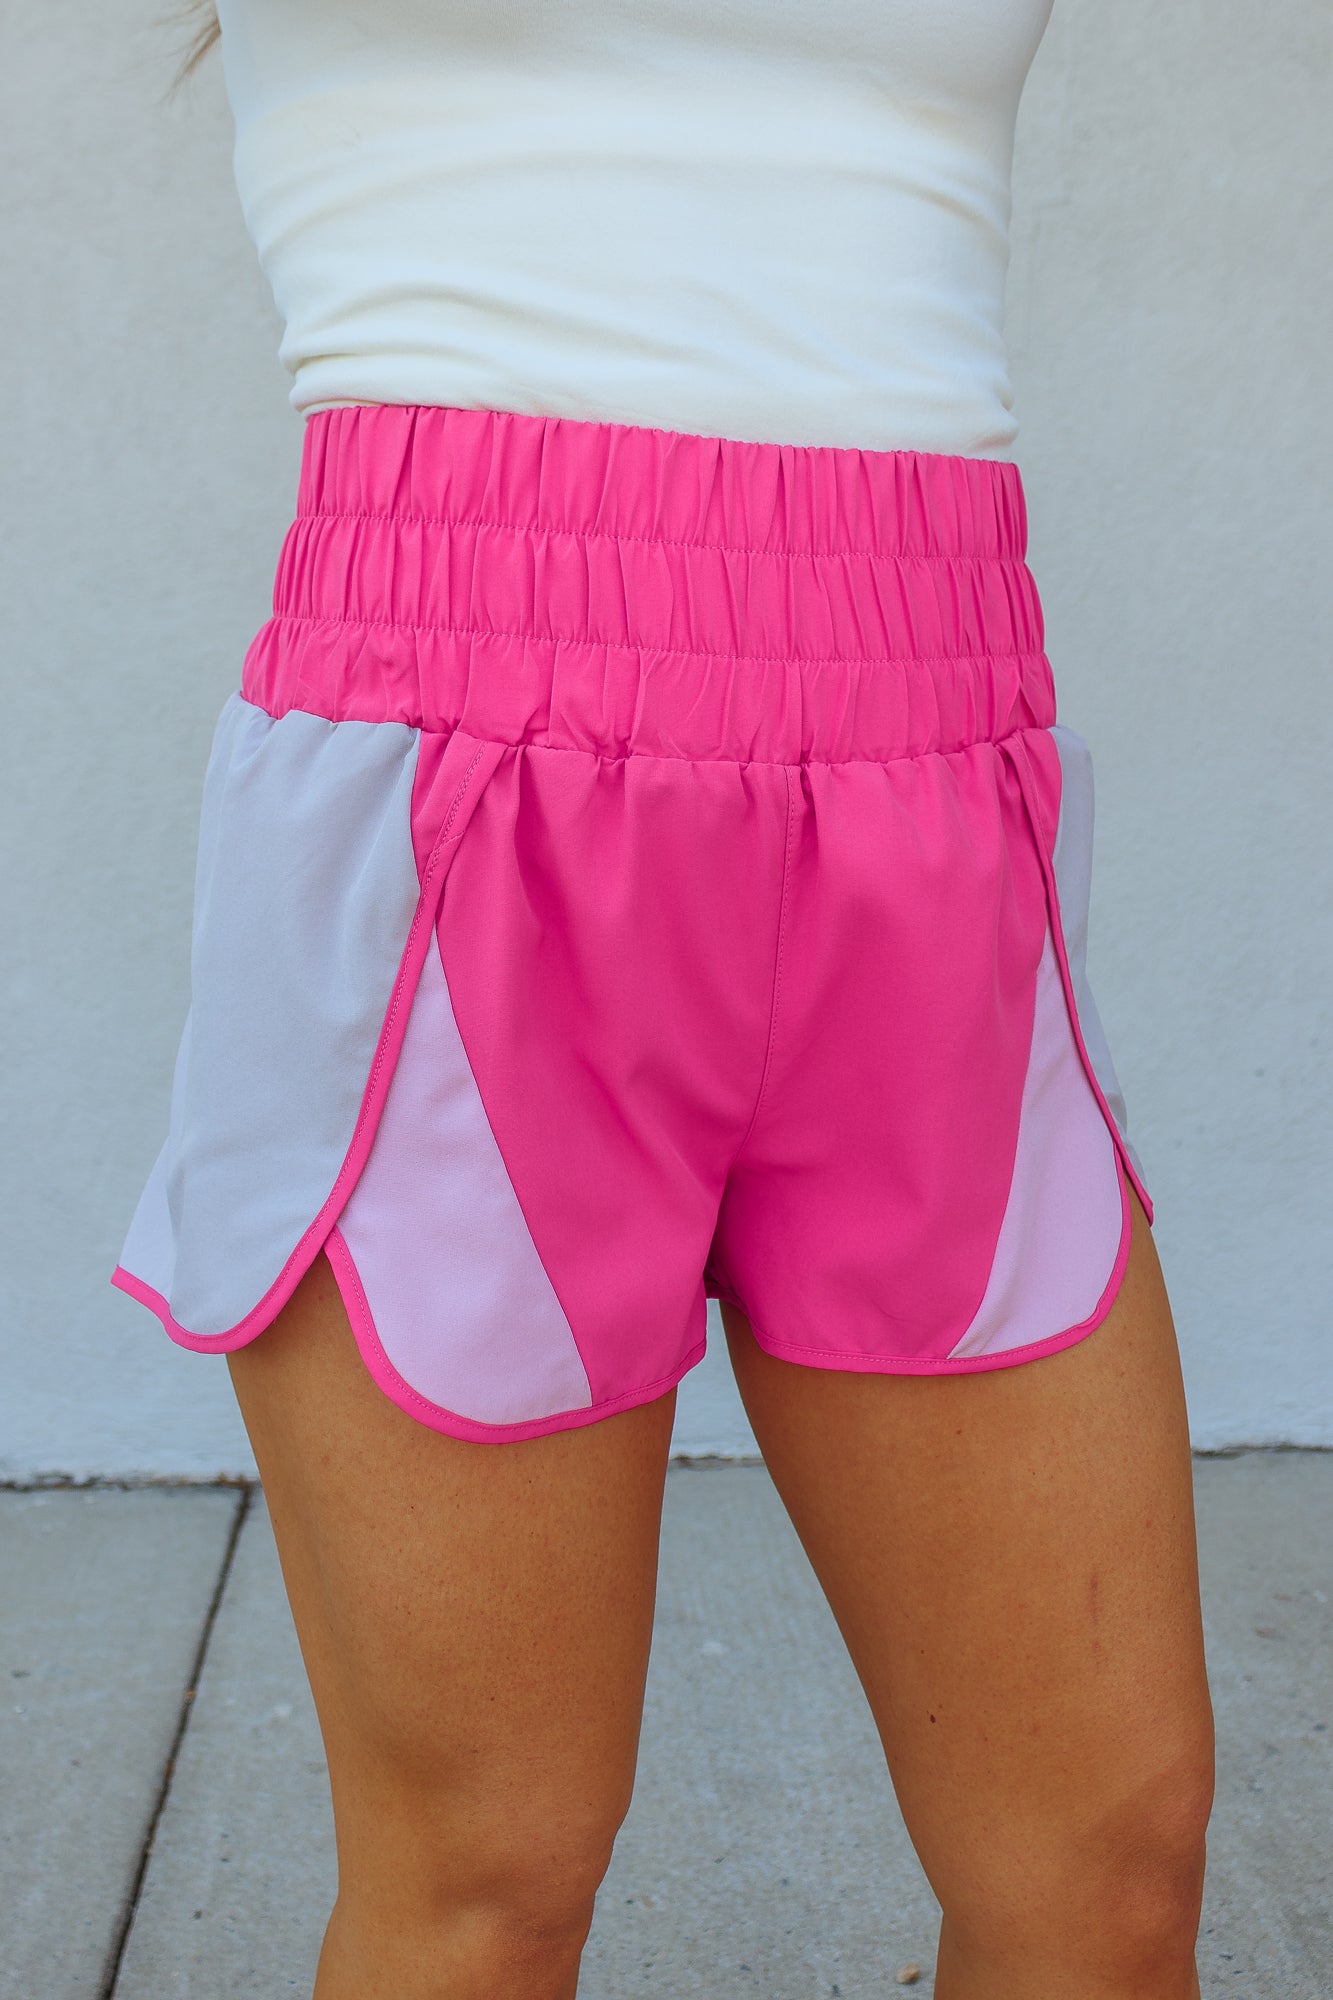 Kaylee Color-Block Shorts - Hot Pink